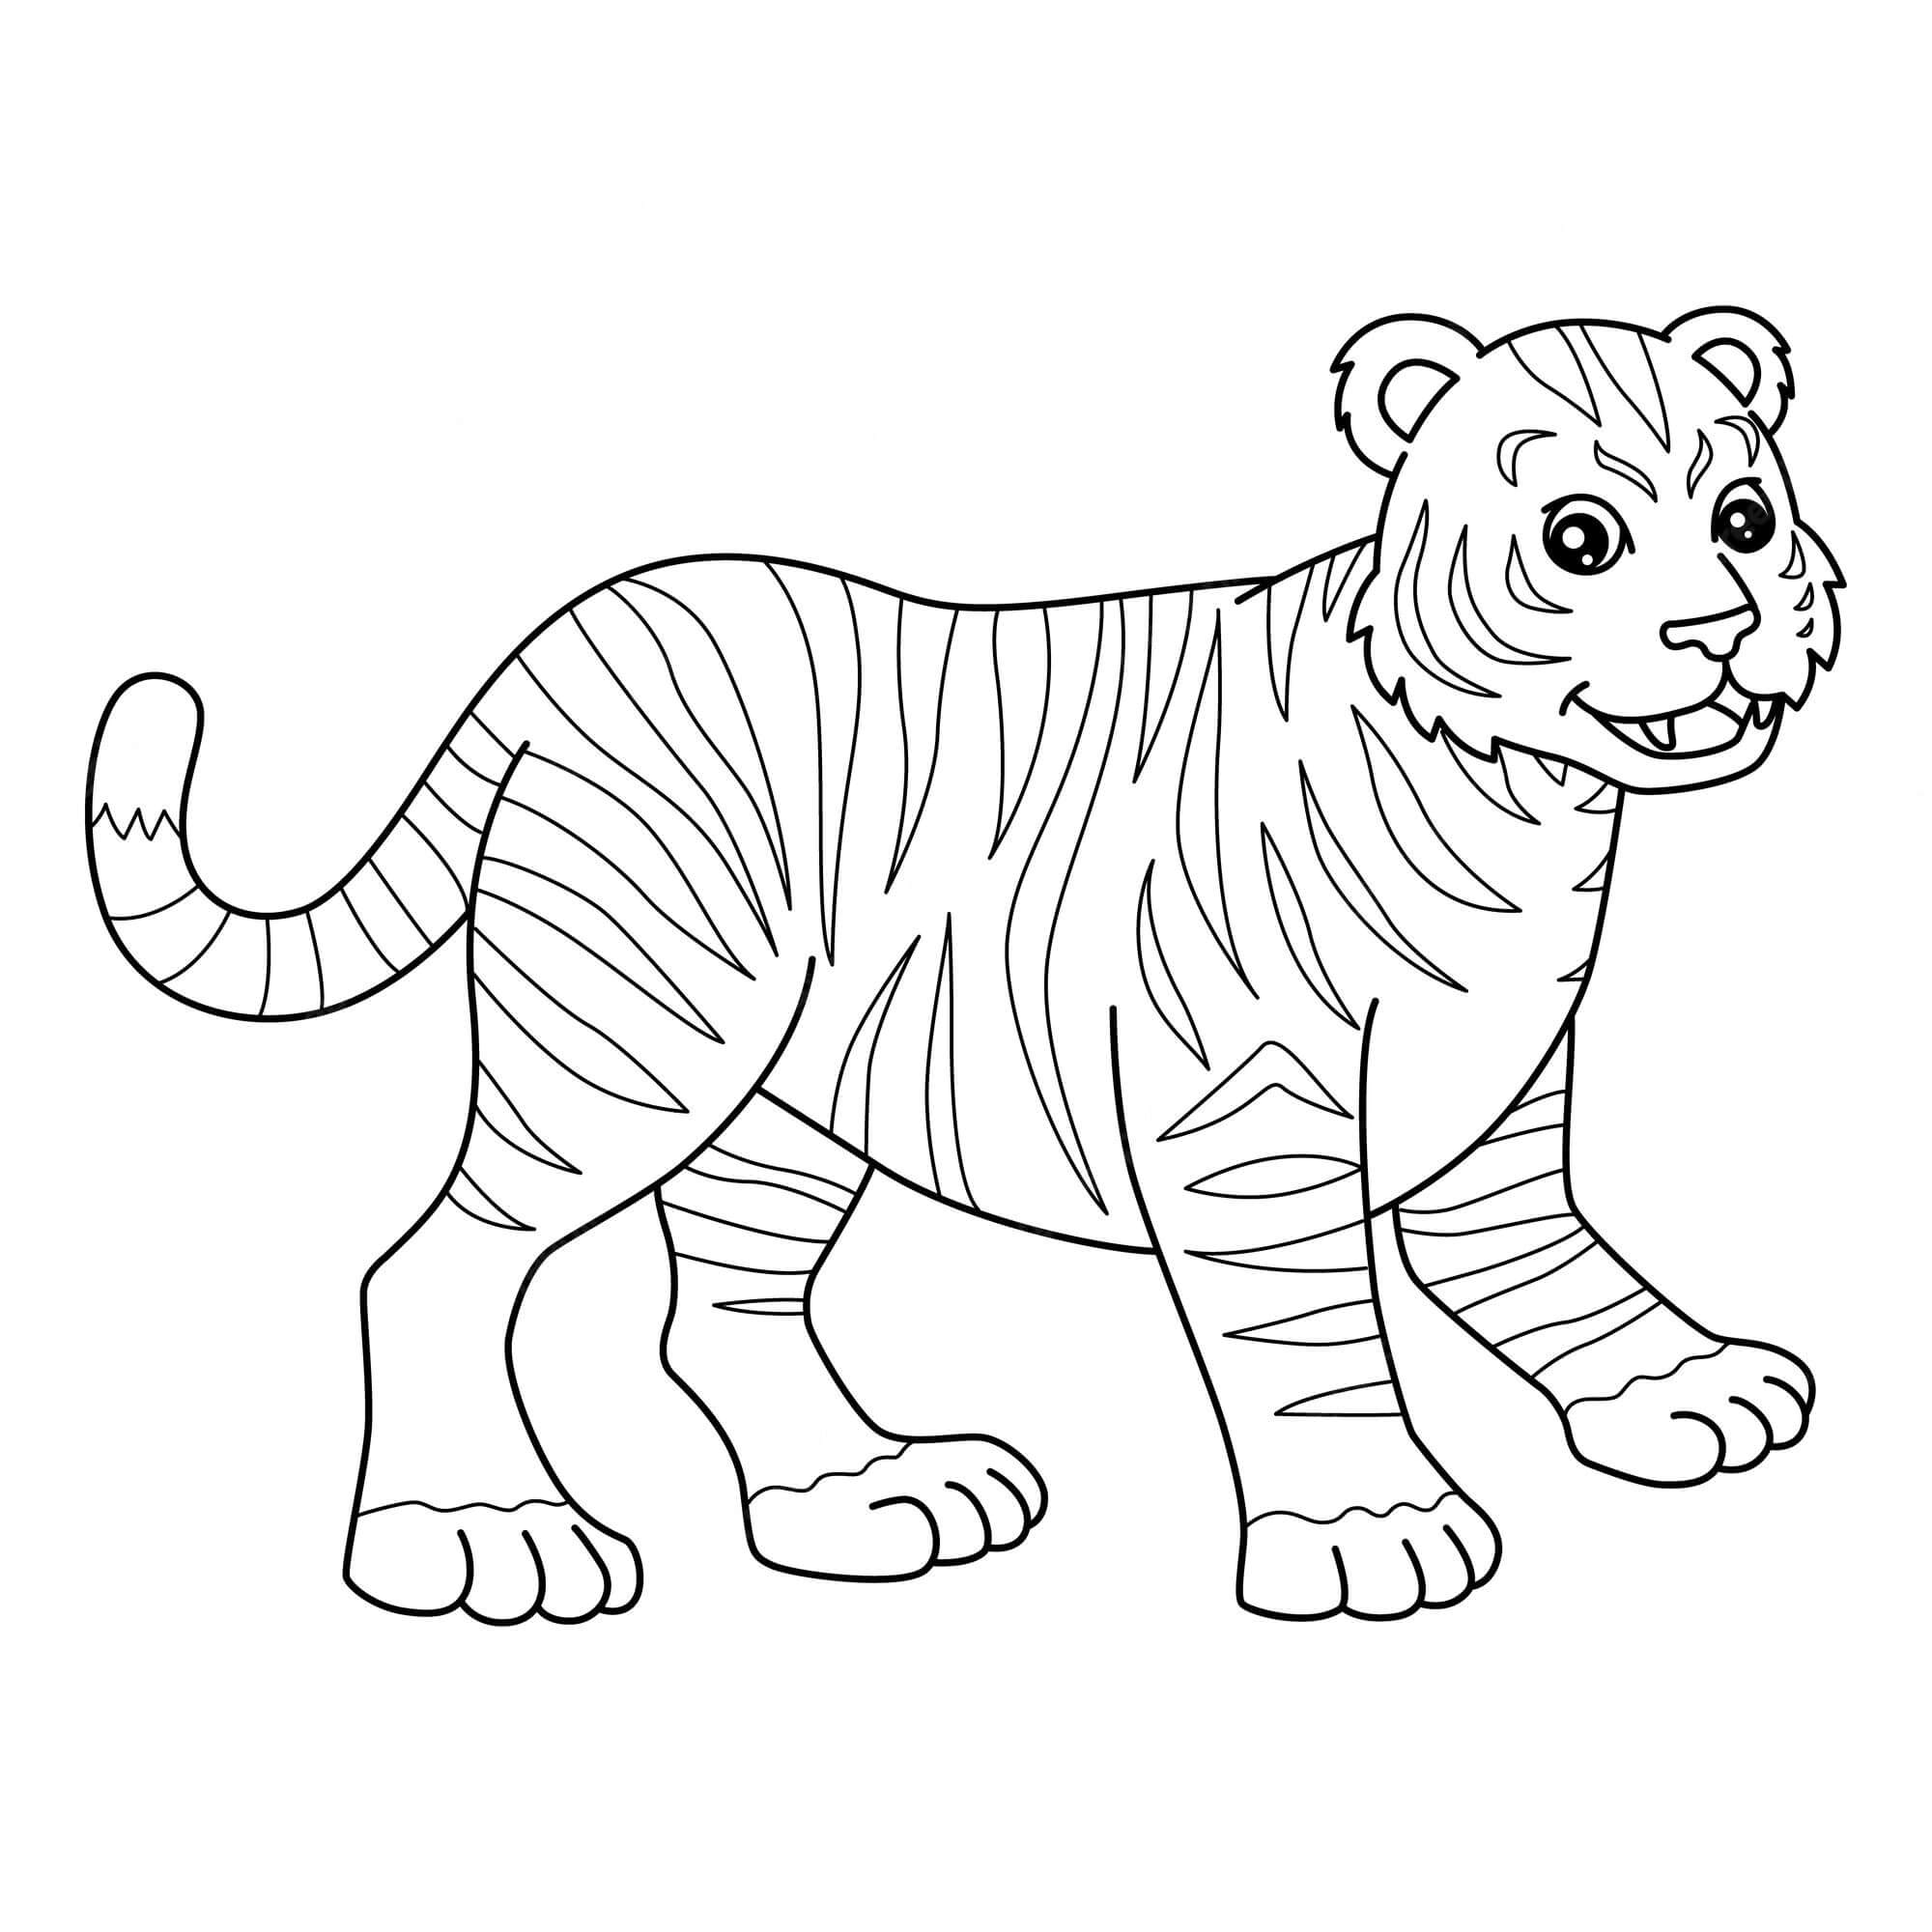 Desenhos de Divertido Tigre para colorir